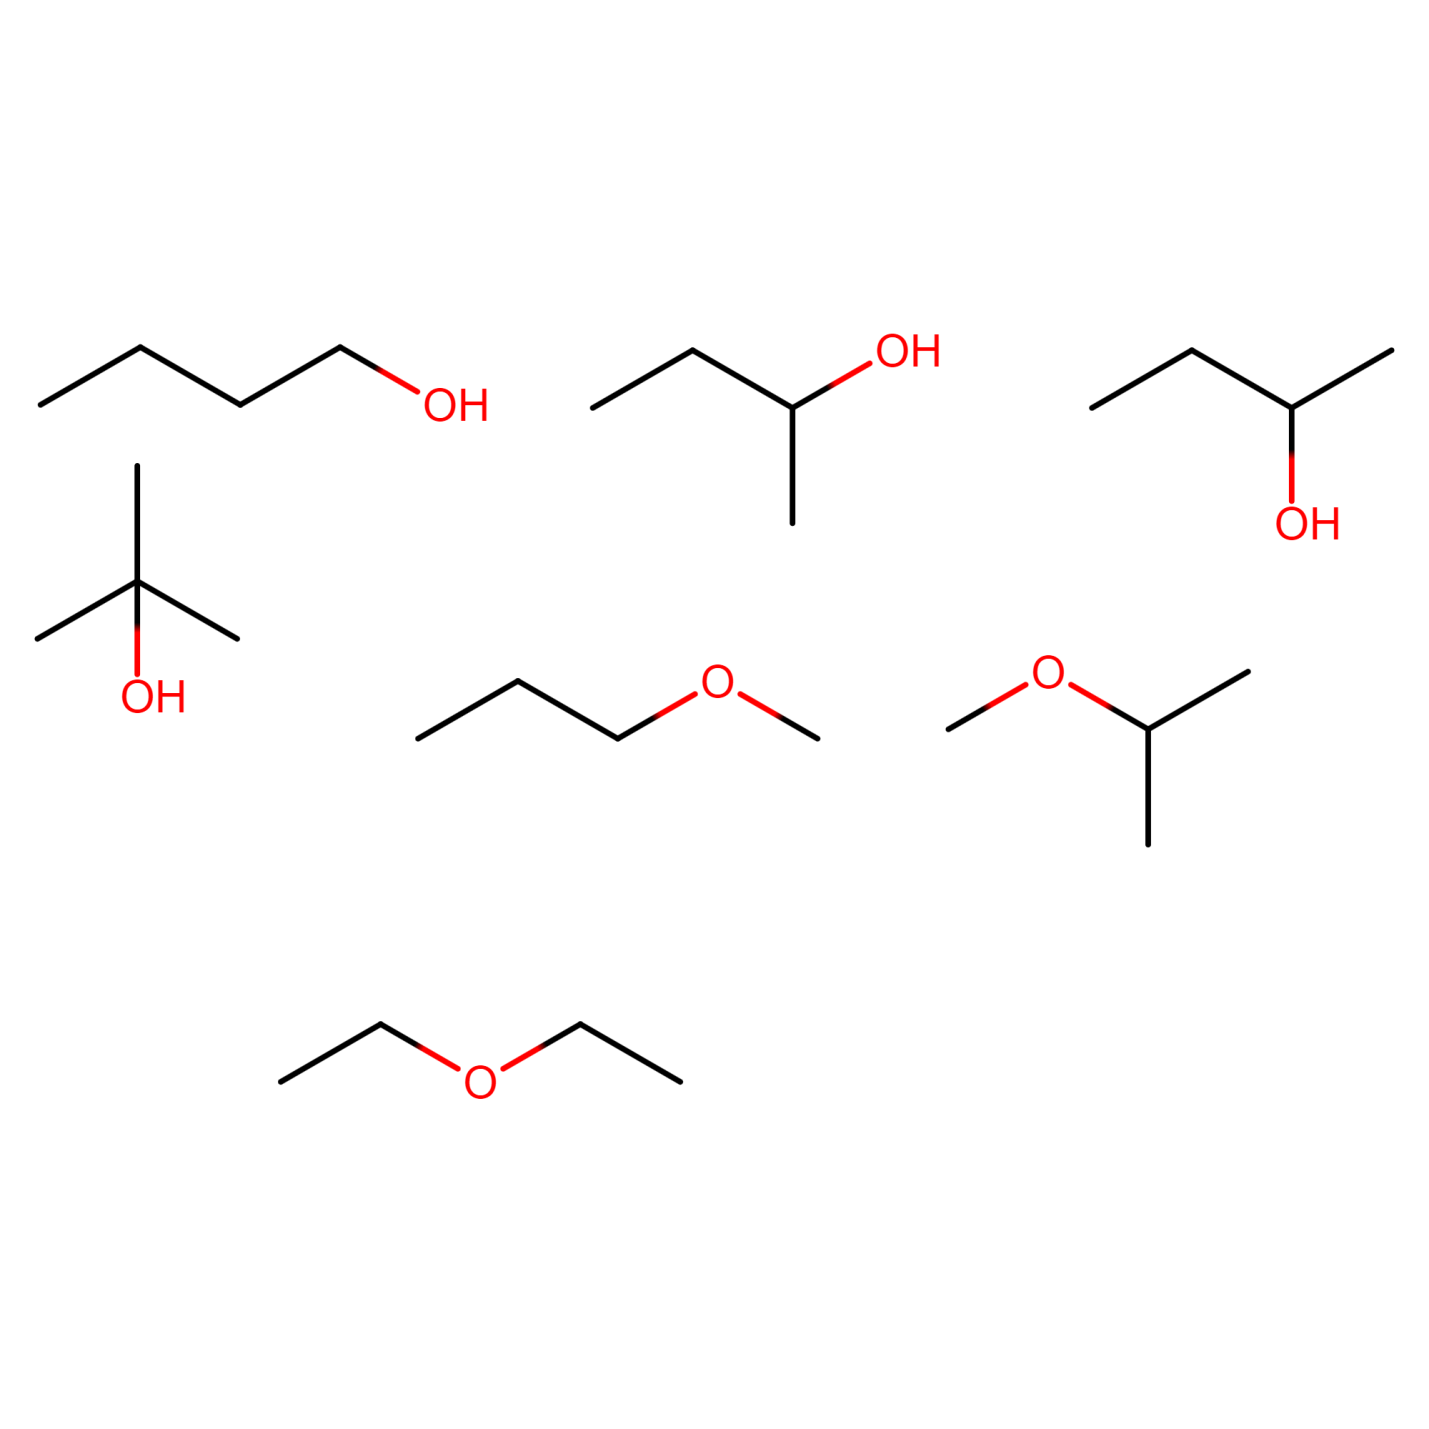  2-methoxypropane